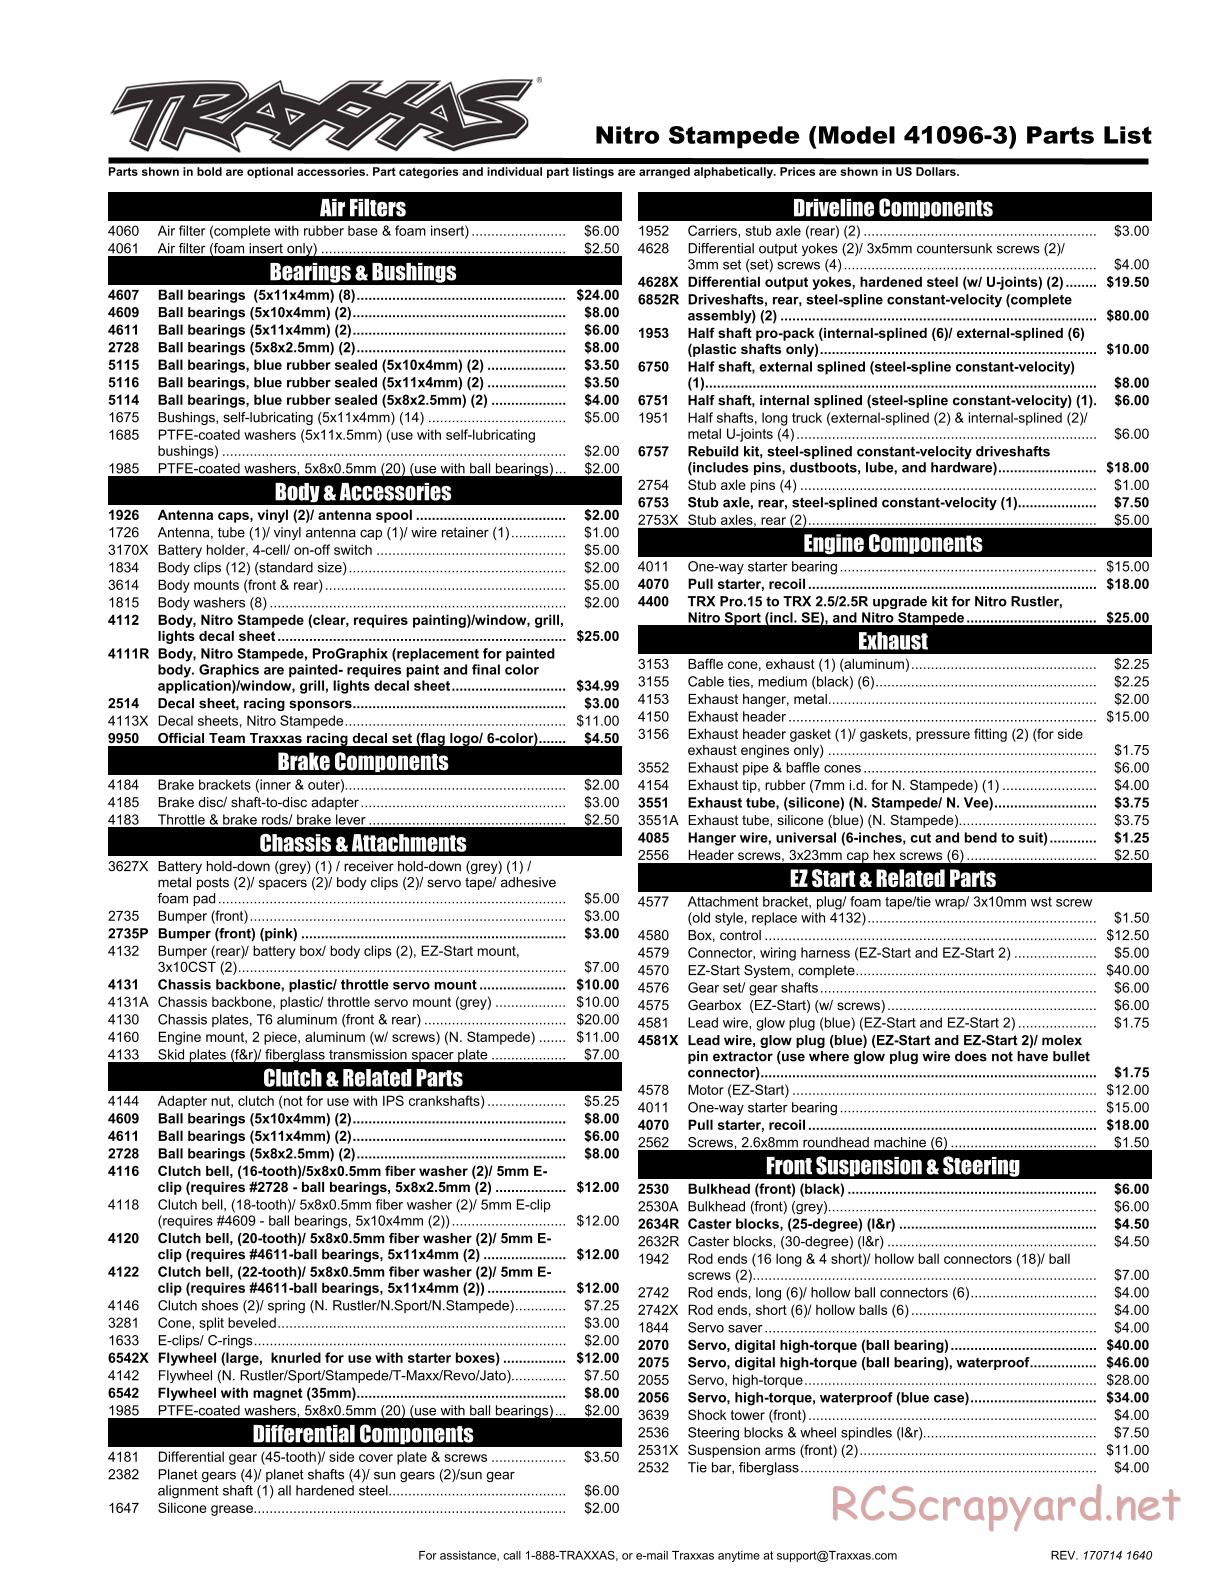 Traxxas - Nitro Stampede TSM - Parts List - Page 1